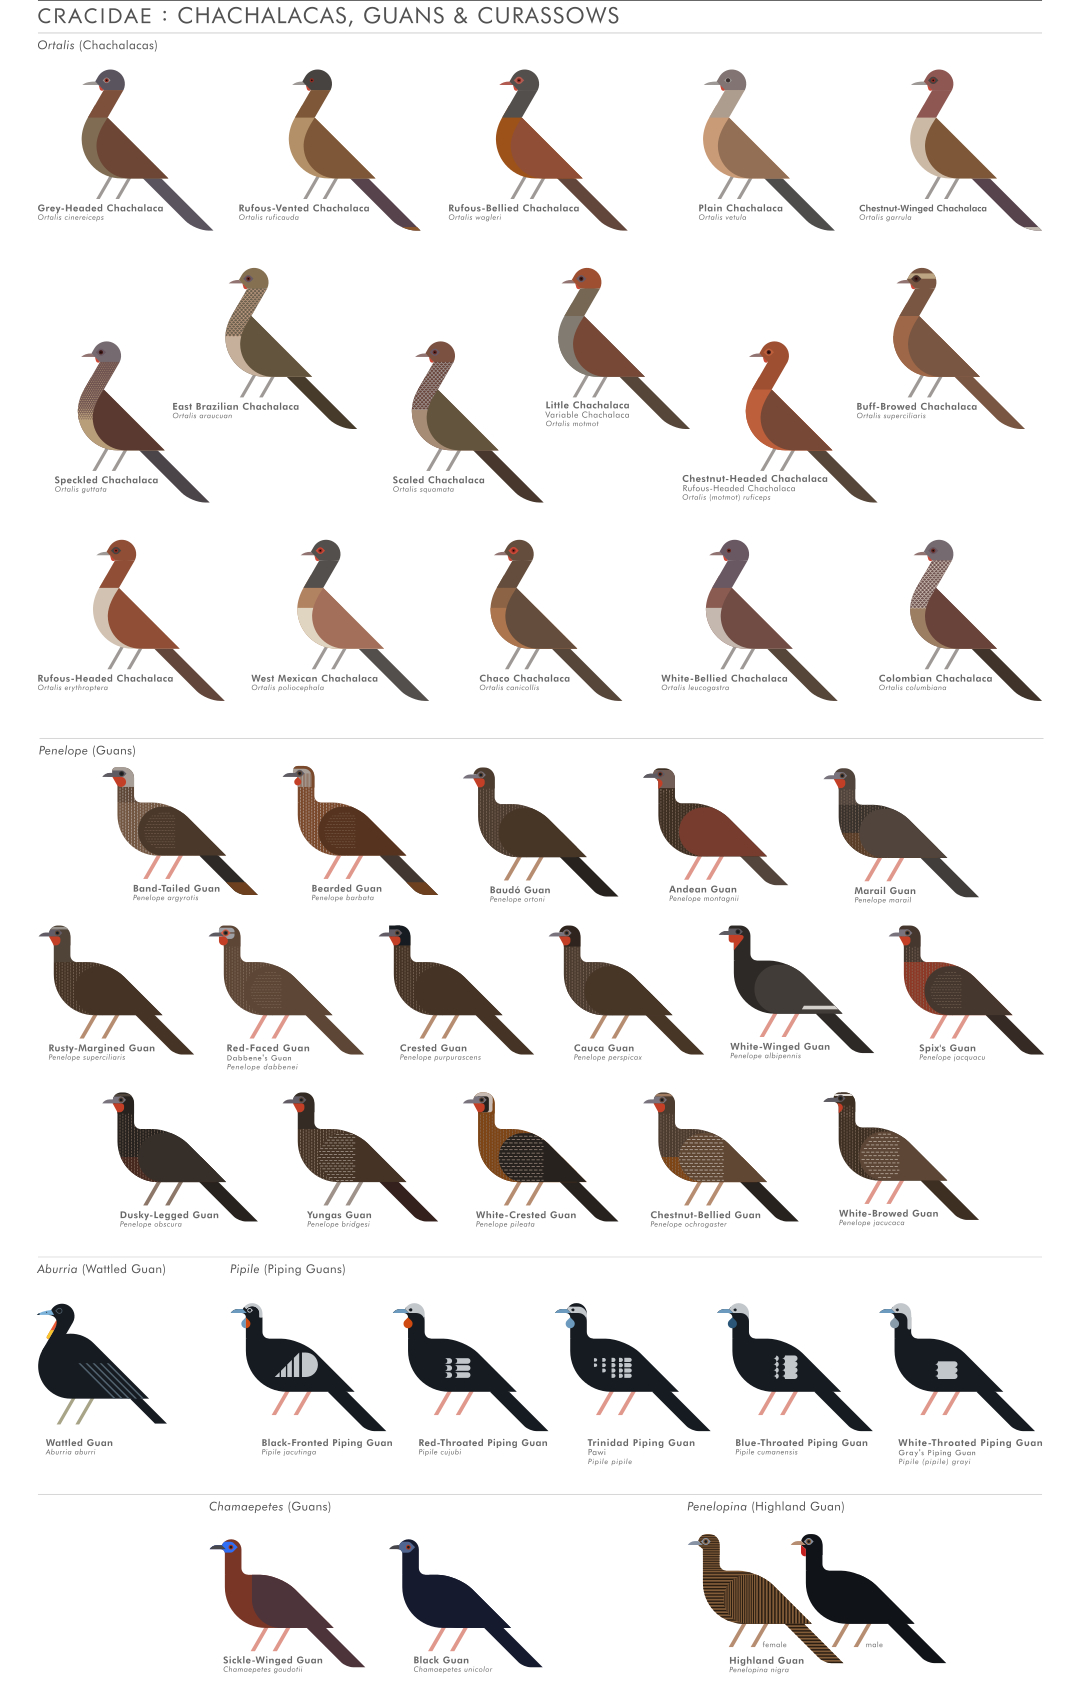 scott partridge - ave - avian vector encyclopedia - guans chachalaca cracidae - bird vector art